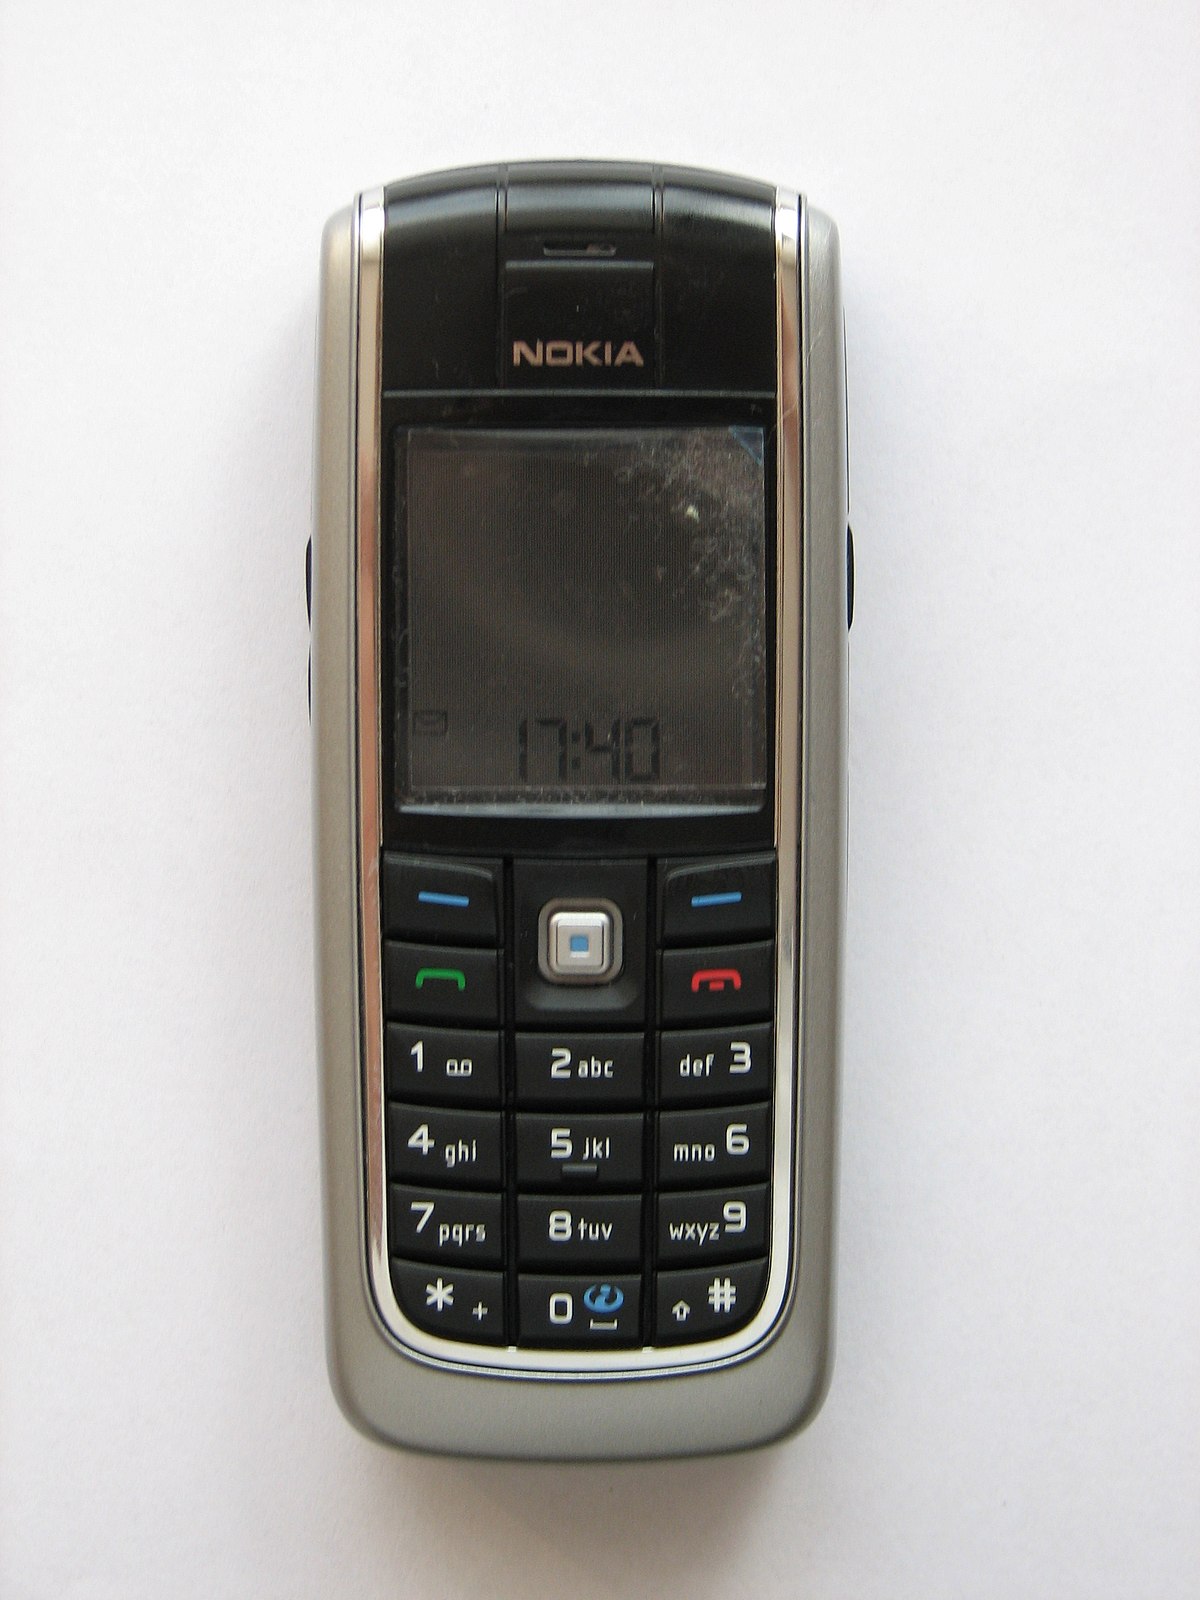 File Nokia 6021 Jpg Wikimedia Commons